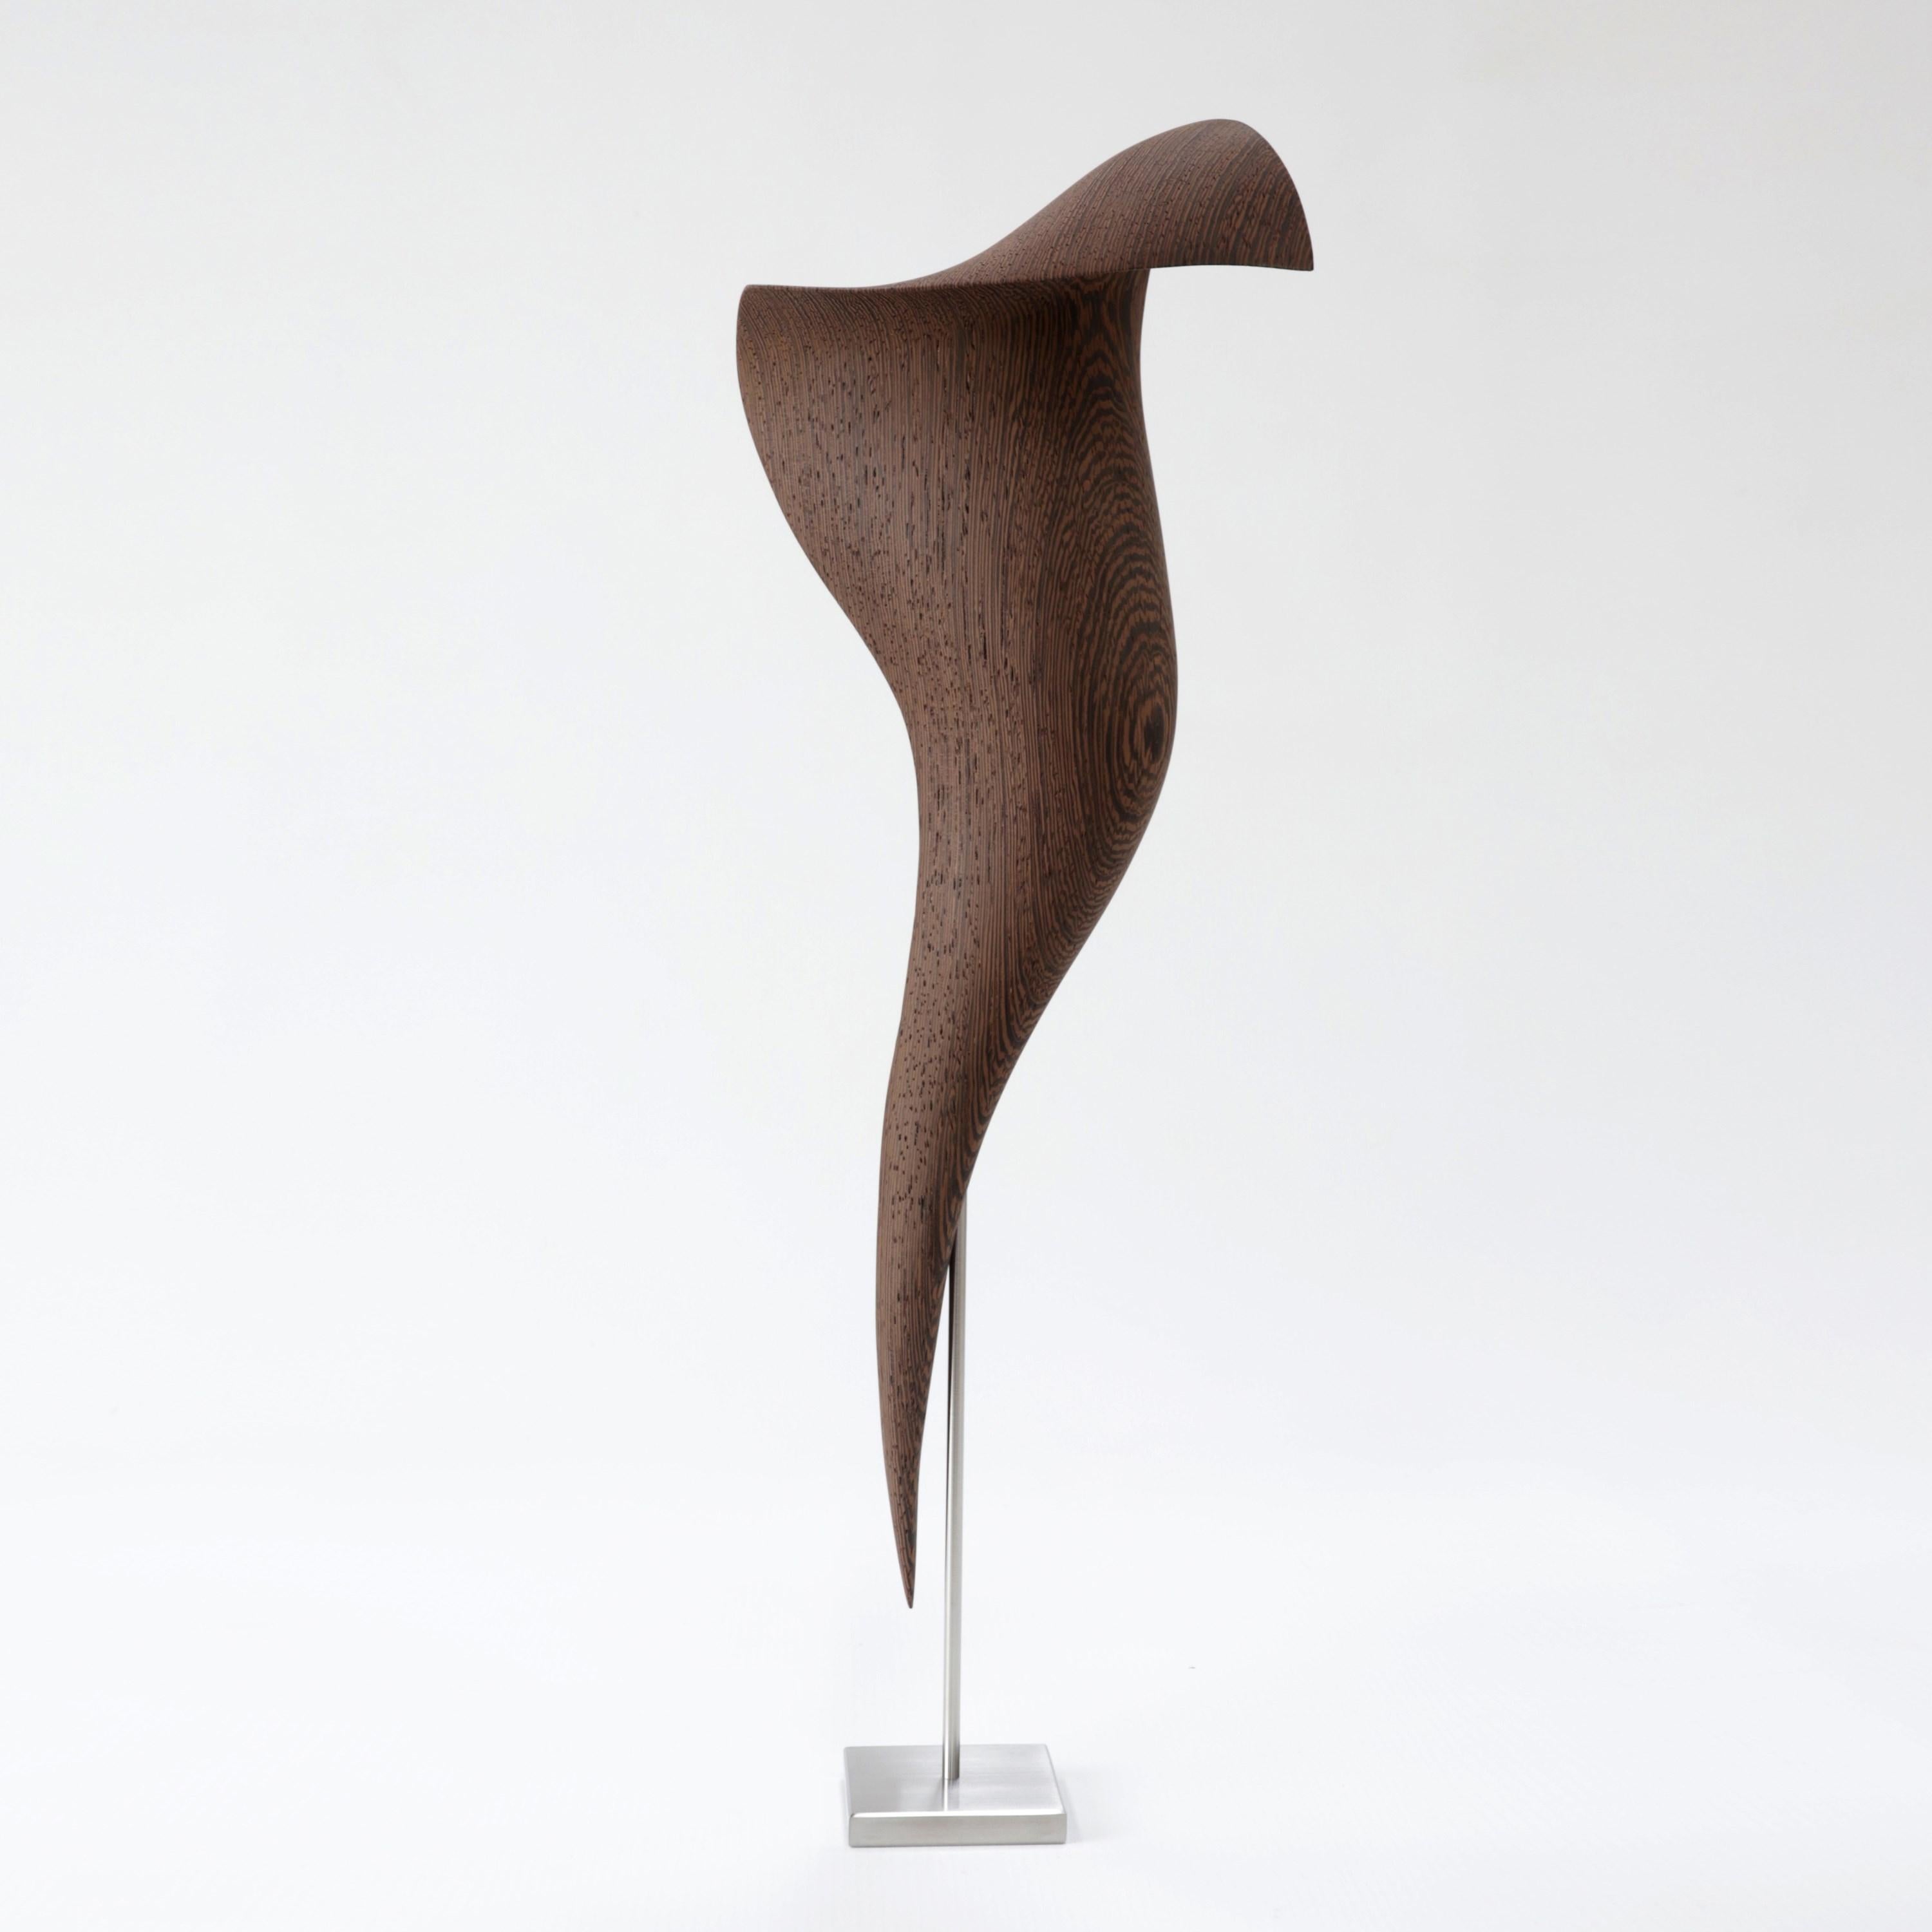 Flow Petit No 3, an Abstract Wooden Sculpture by the Danish Studio Egeværk 1